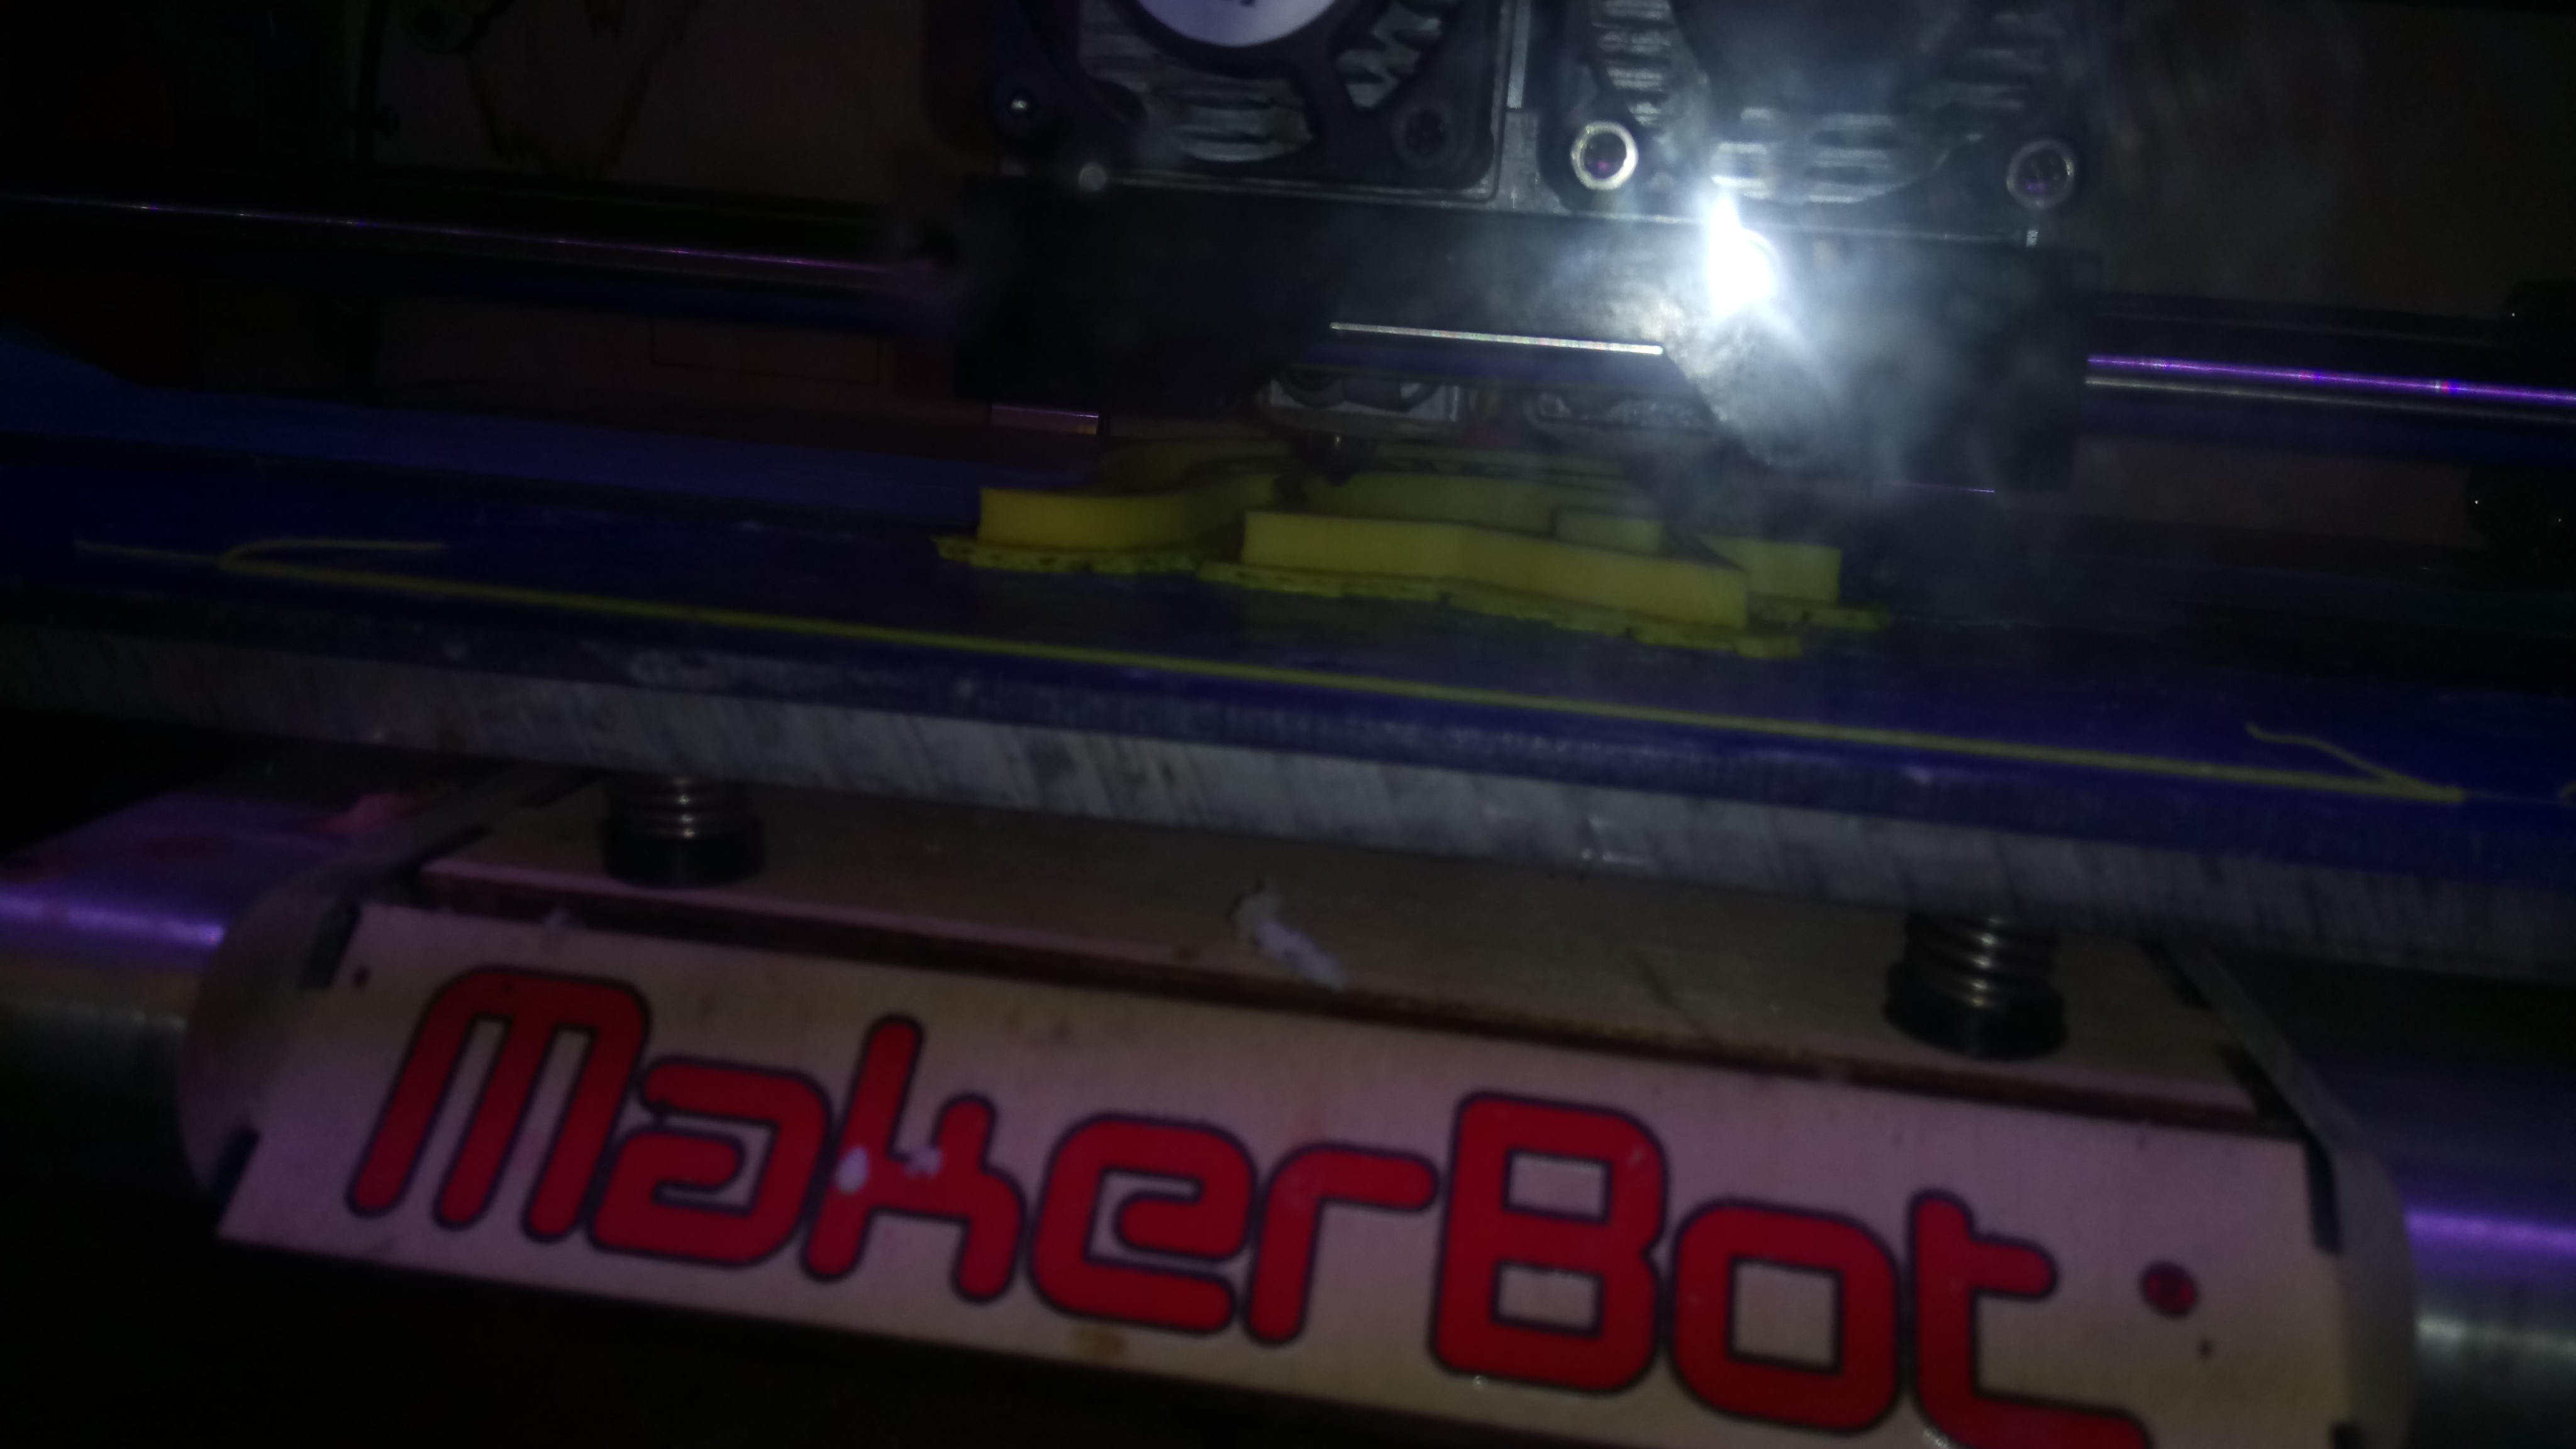 Thumbnail for File:Makerbot replicatior 3Dprinter working.JPG